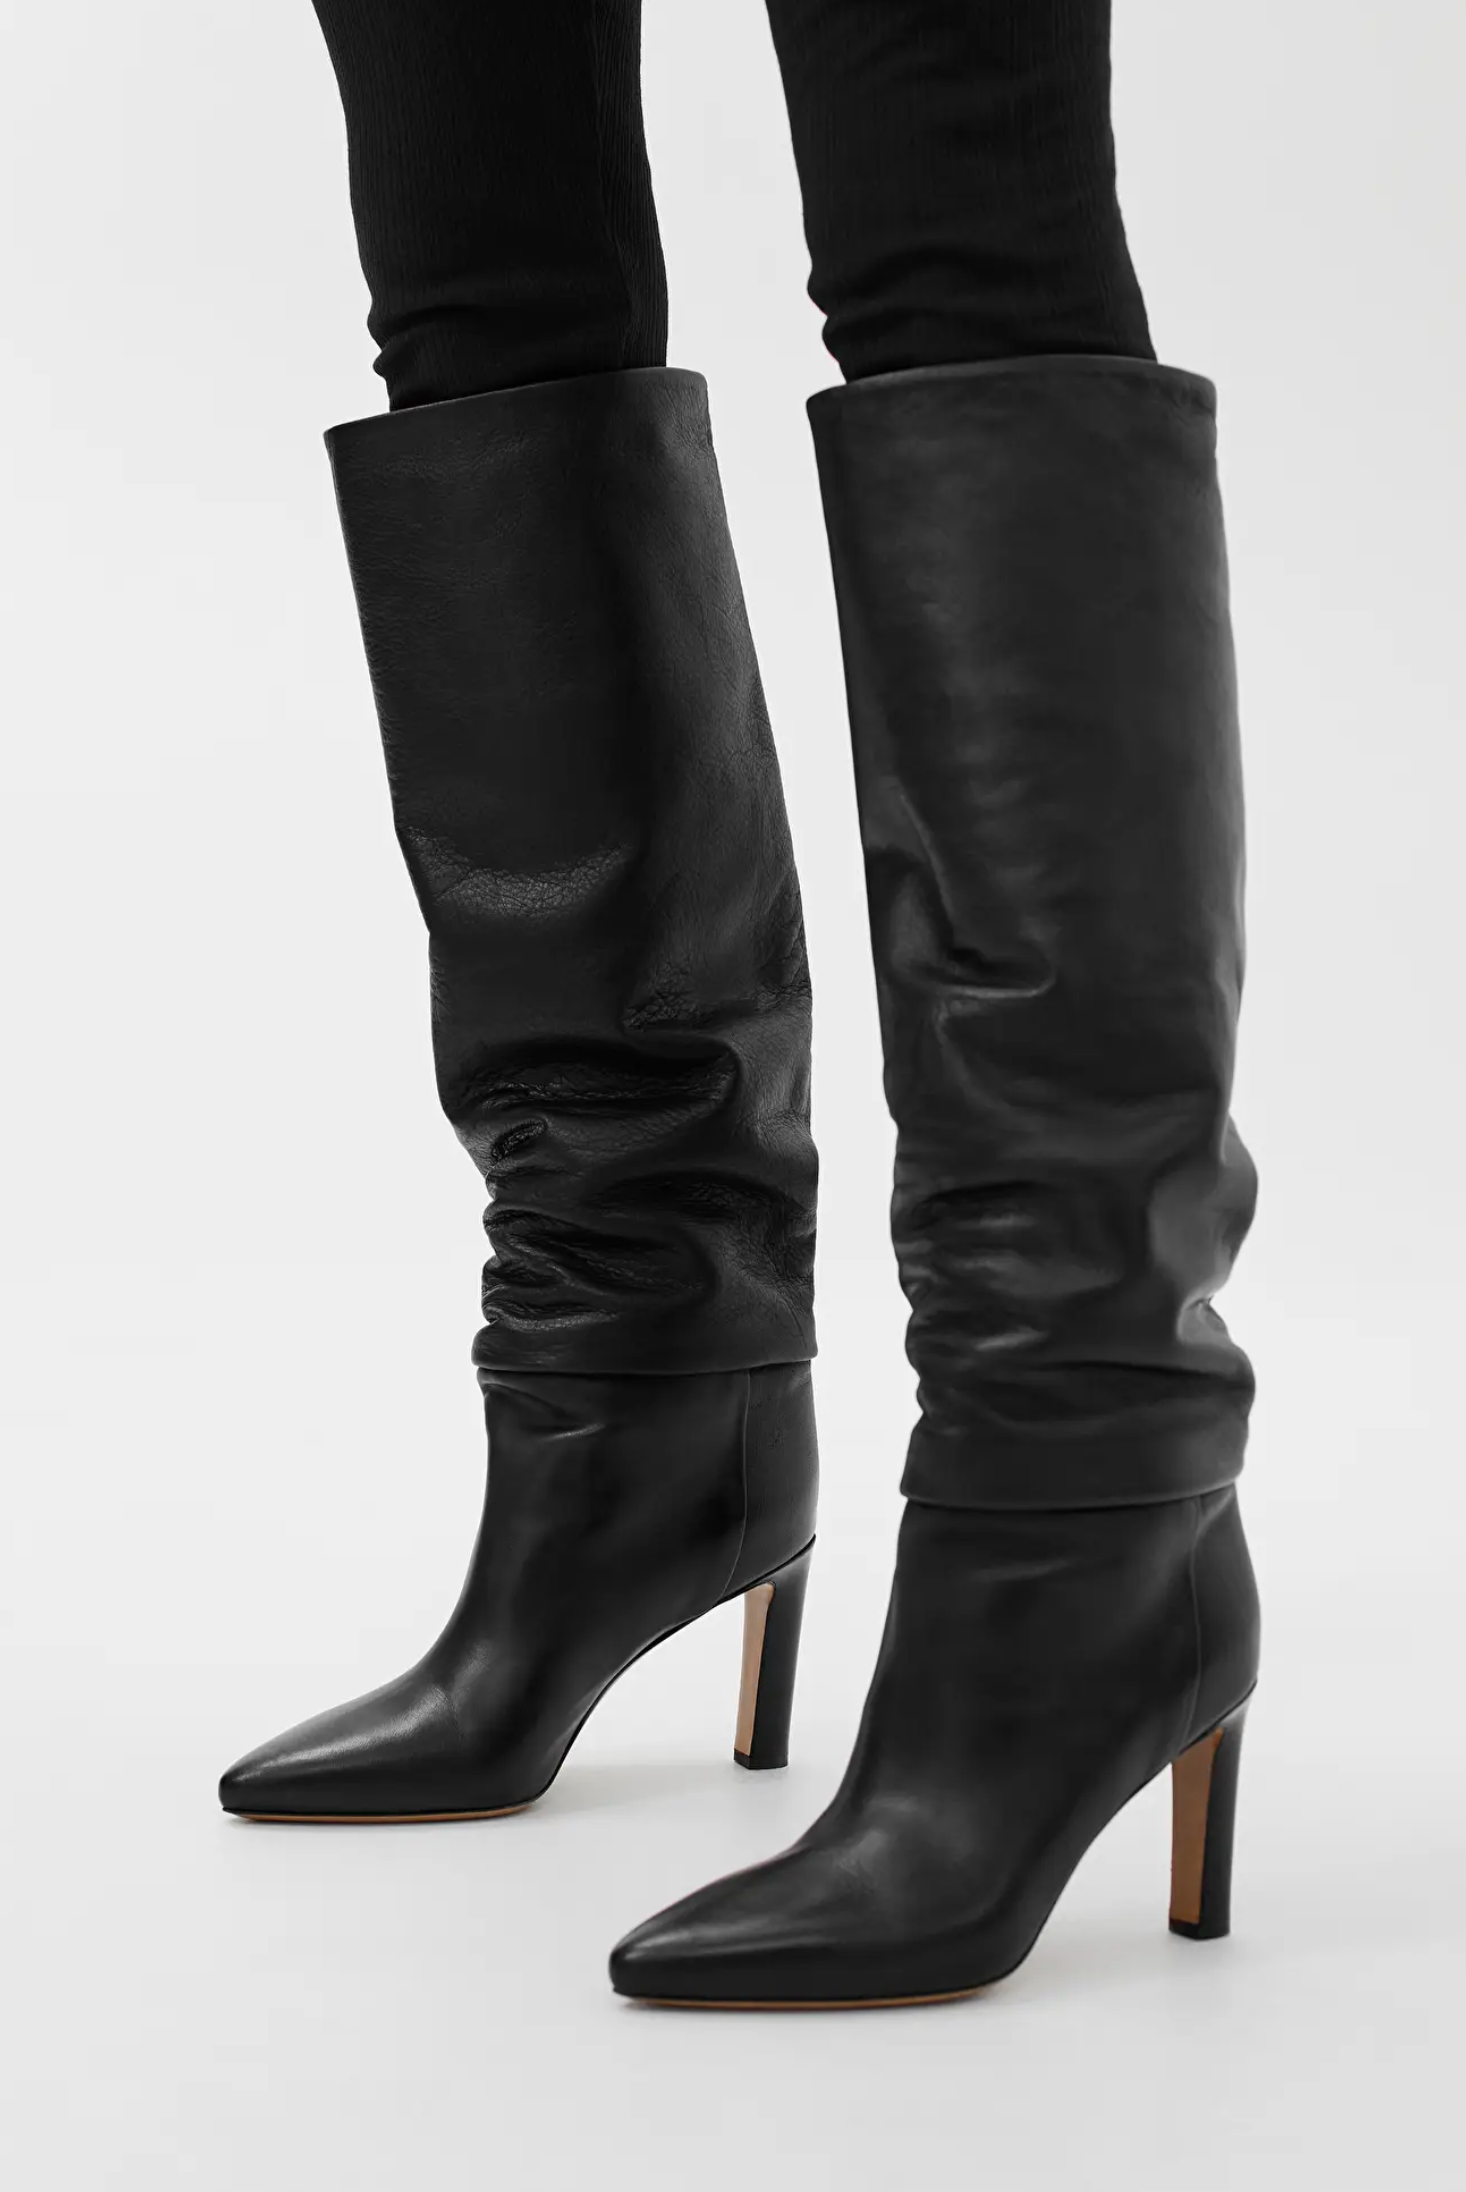 arket black boots